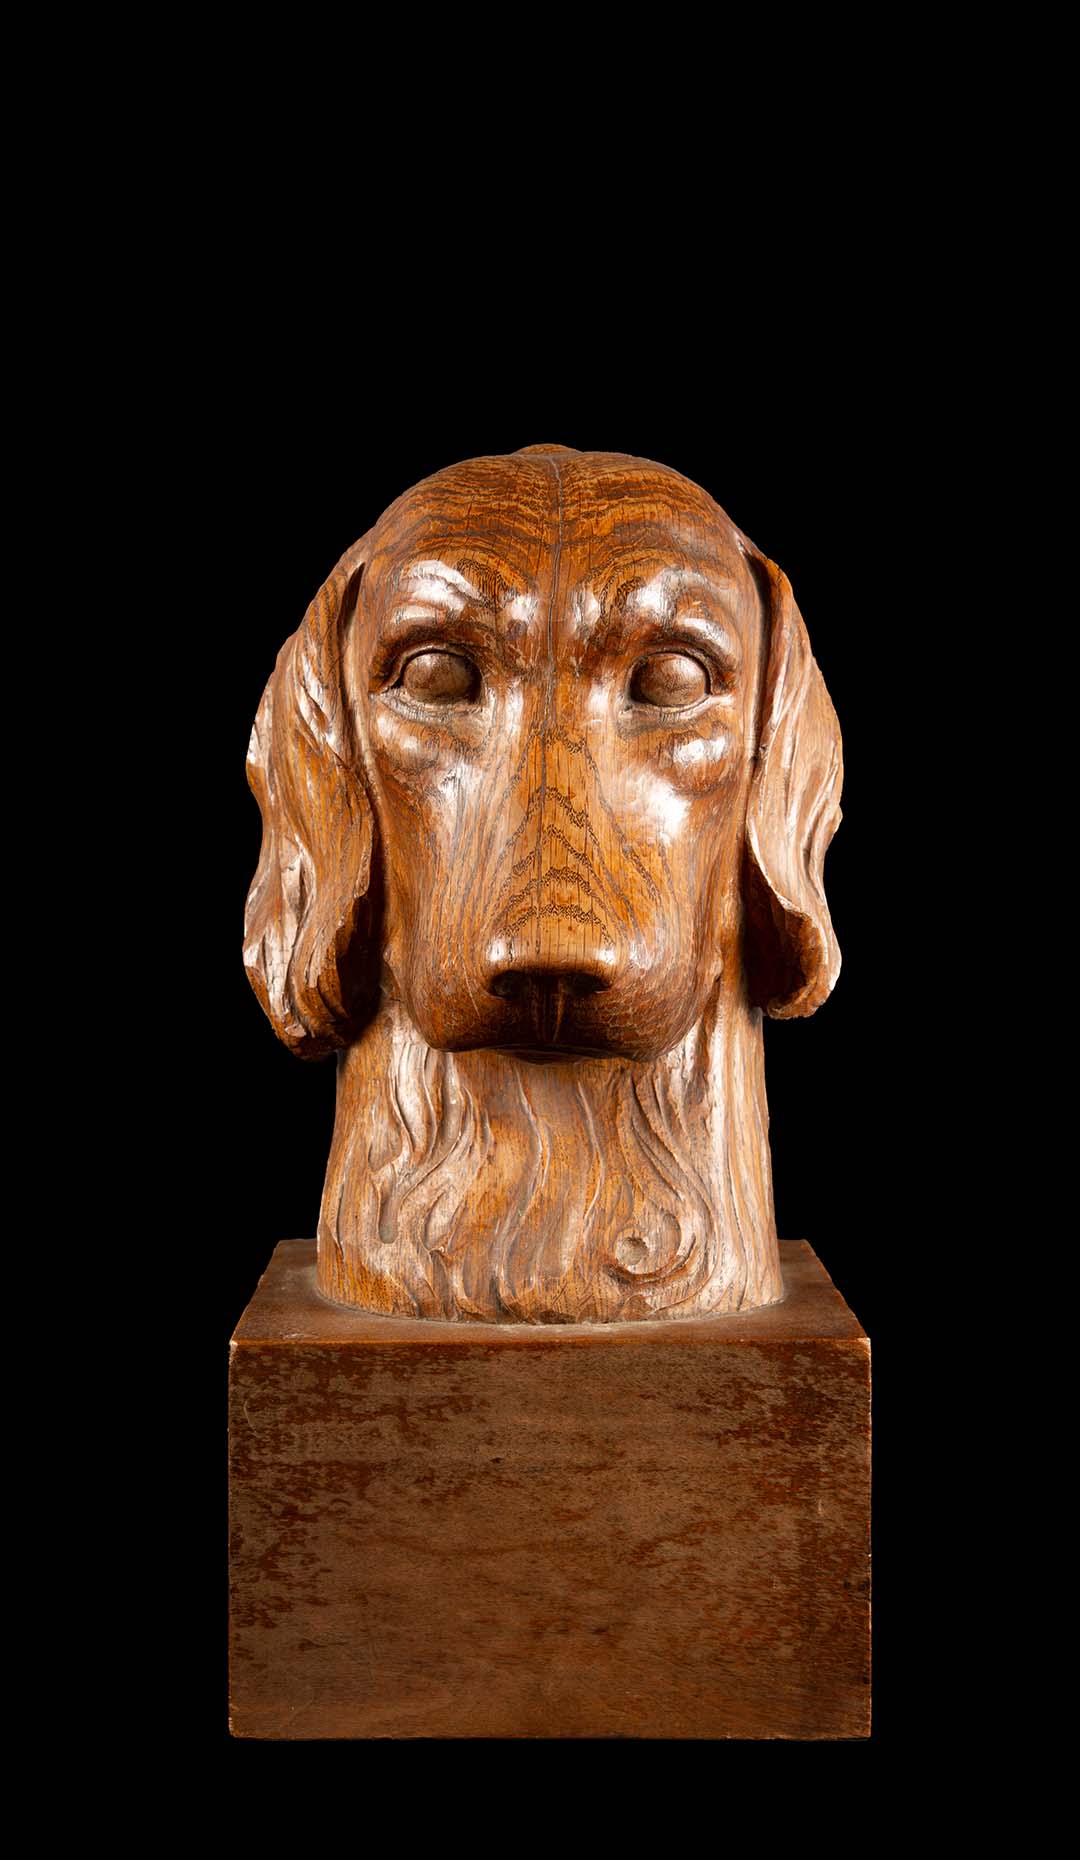 Hand Carved Wood Dog -Man's Best Friend- Signed Massa, 1941